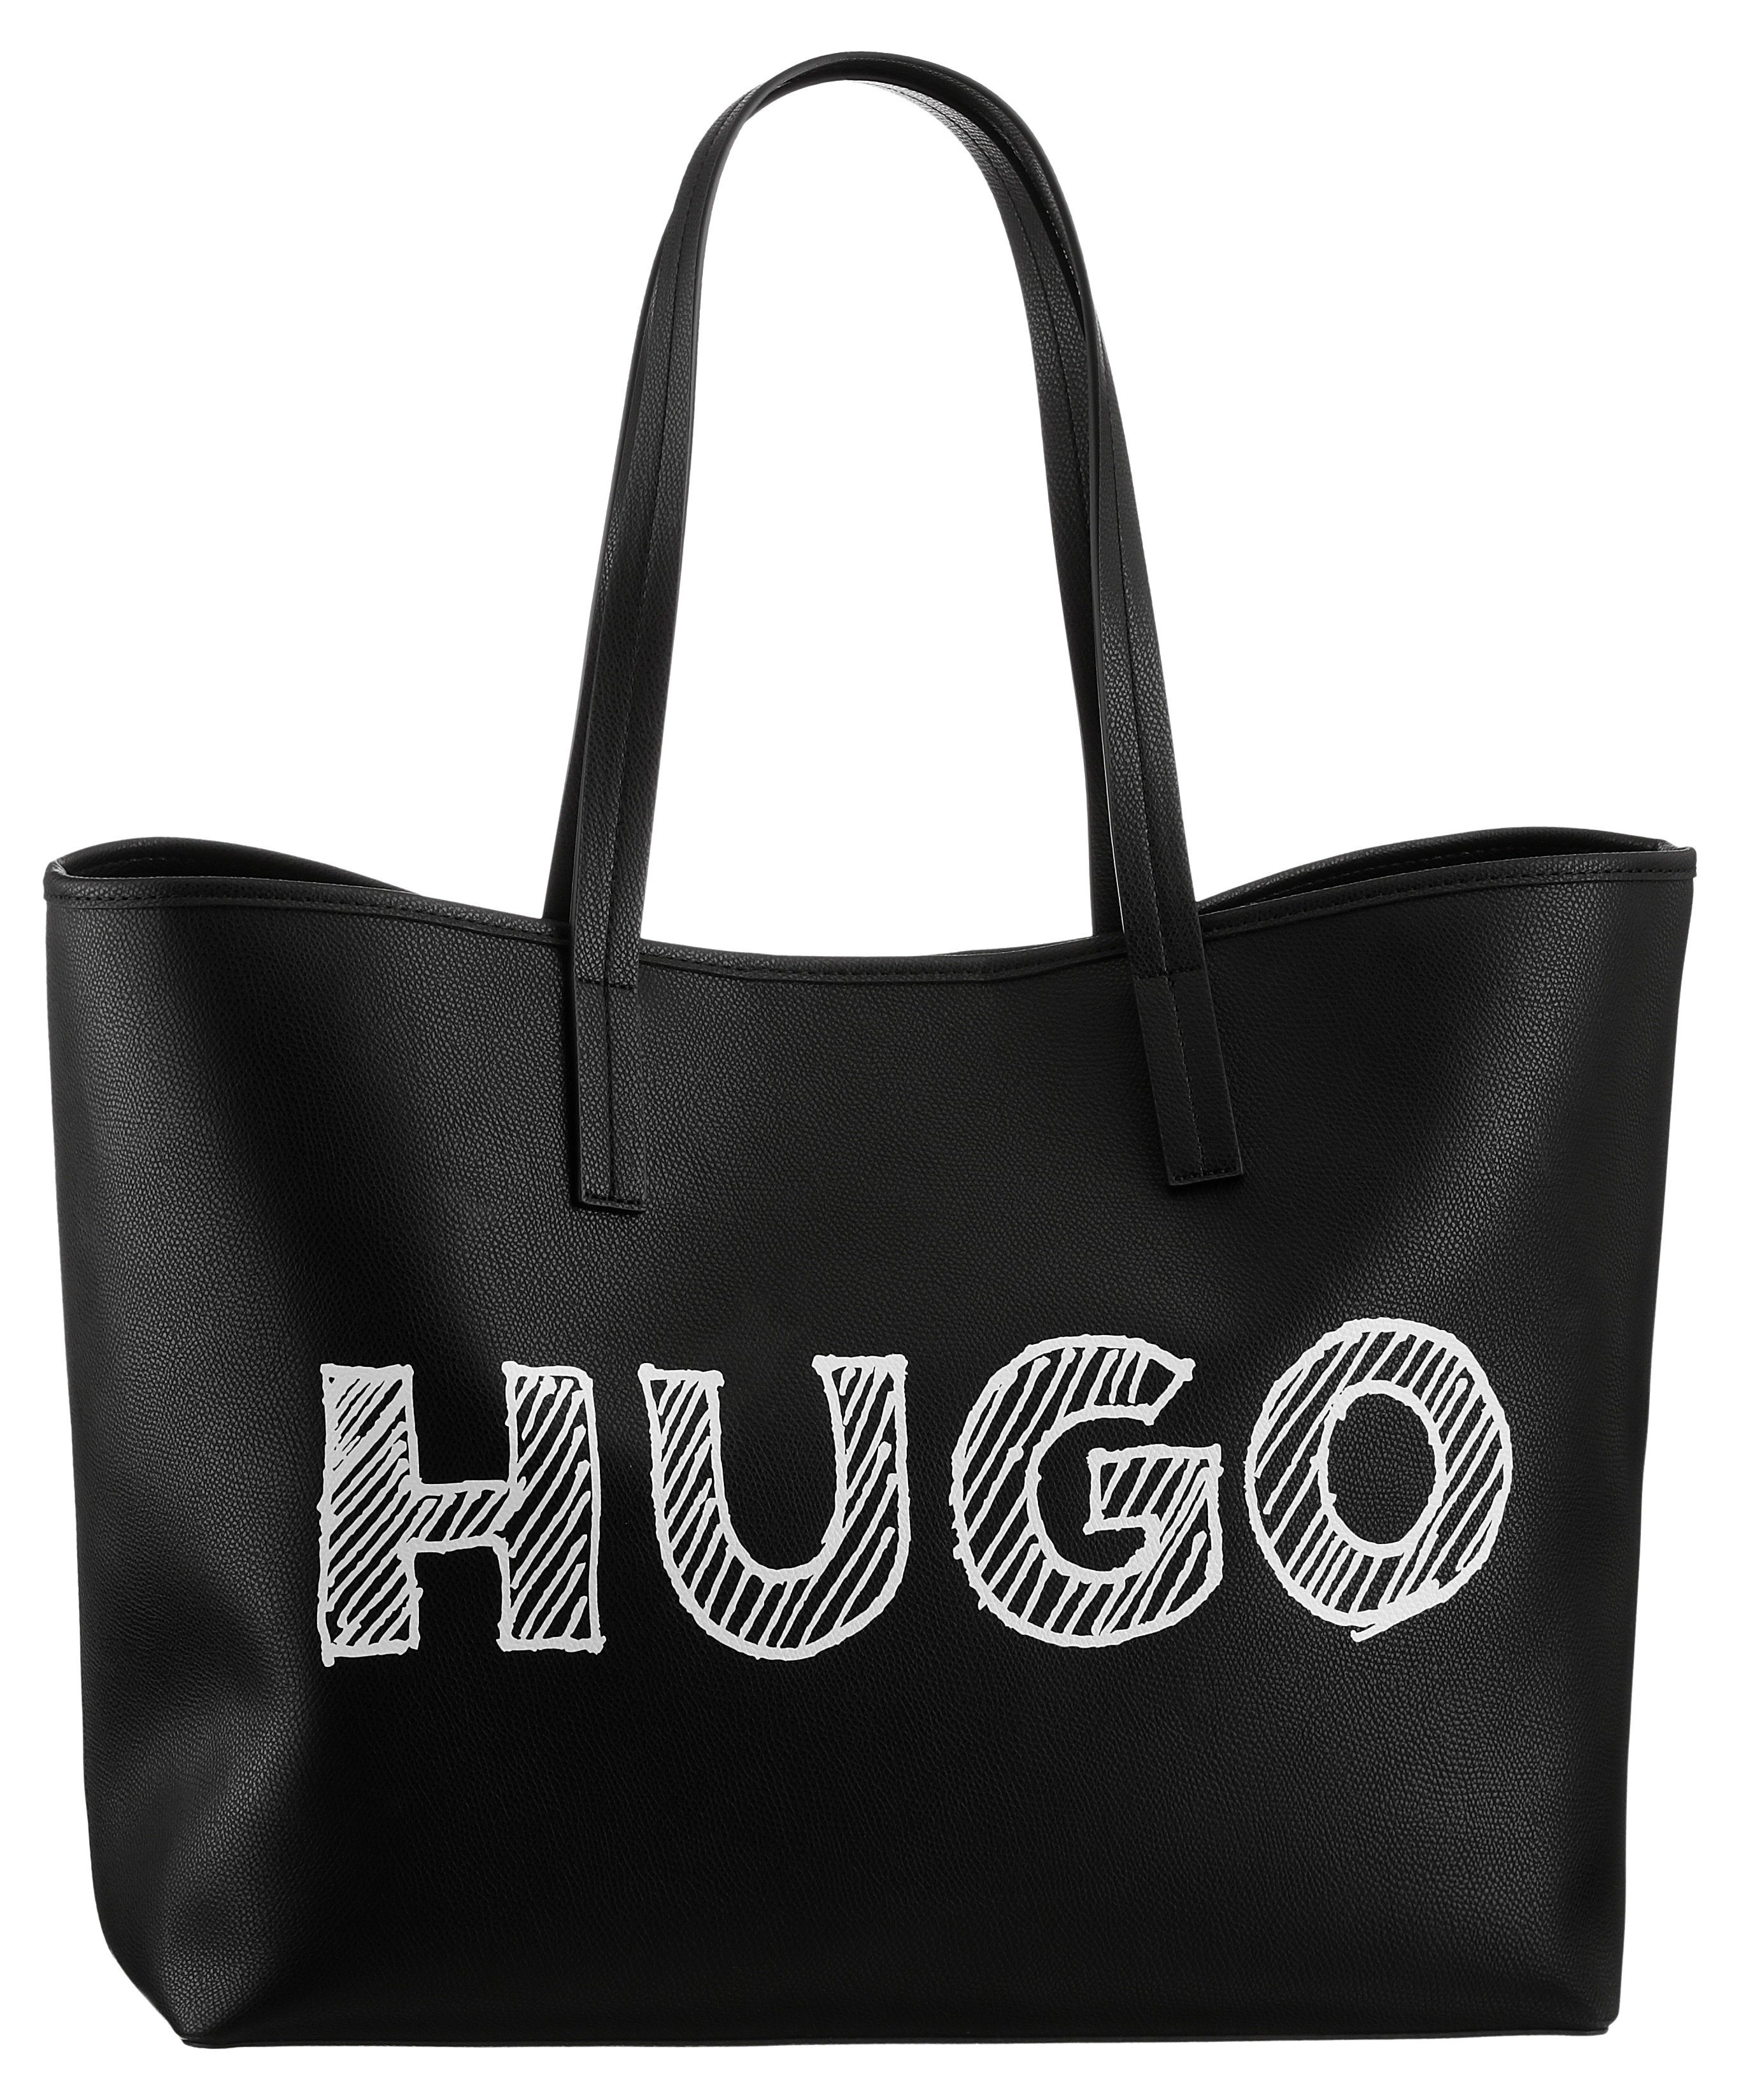 HUGO Shopper Chris Shopper-G, Reißverschluss-Tasche mit herausnehmarer